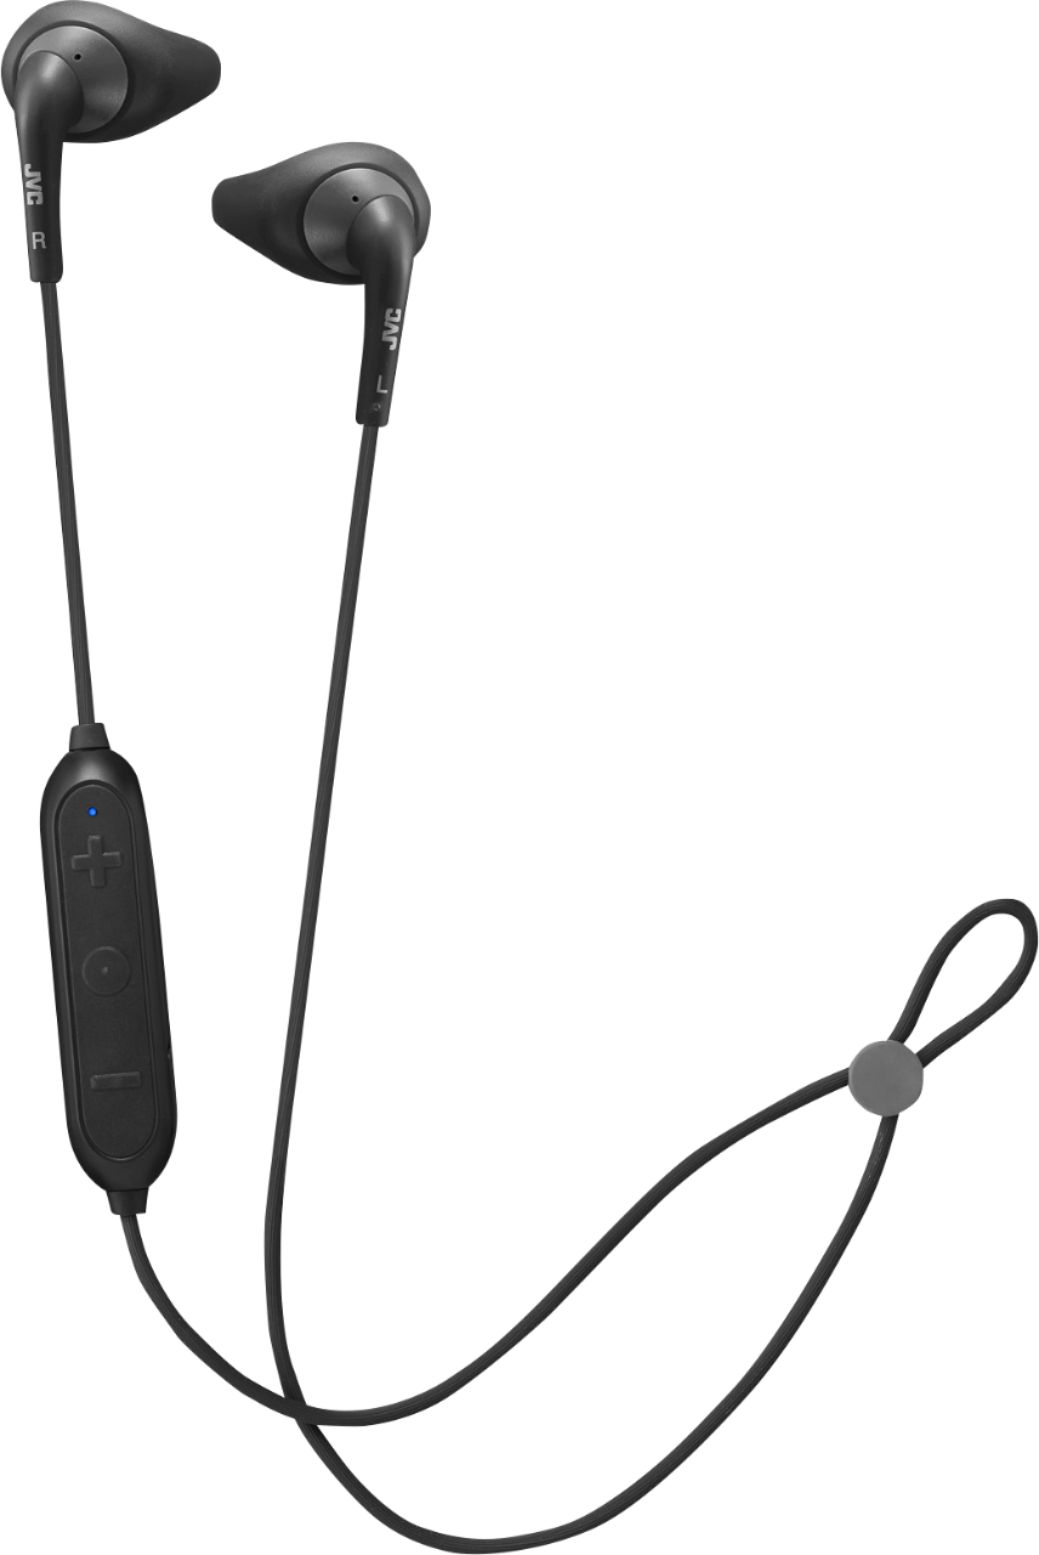 Angle View: JVC - Gumy Sport Wireless Bluetooth Headphones - Black